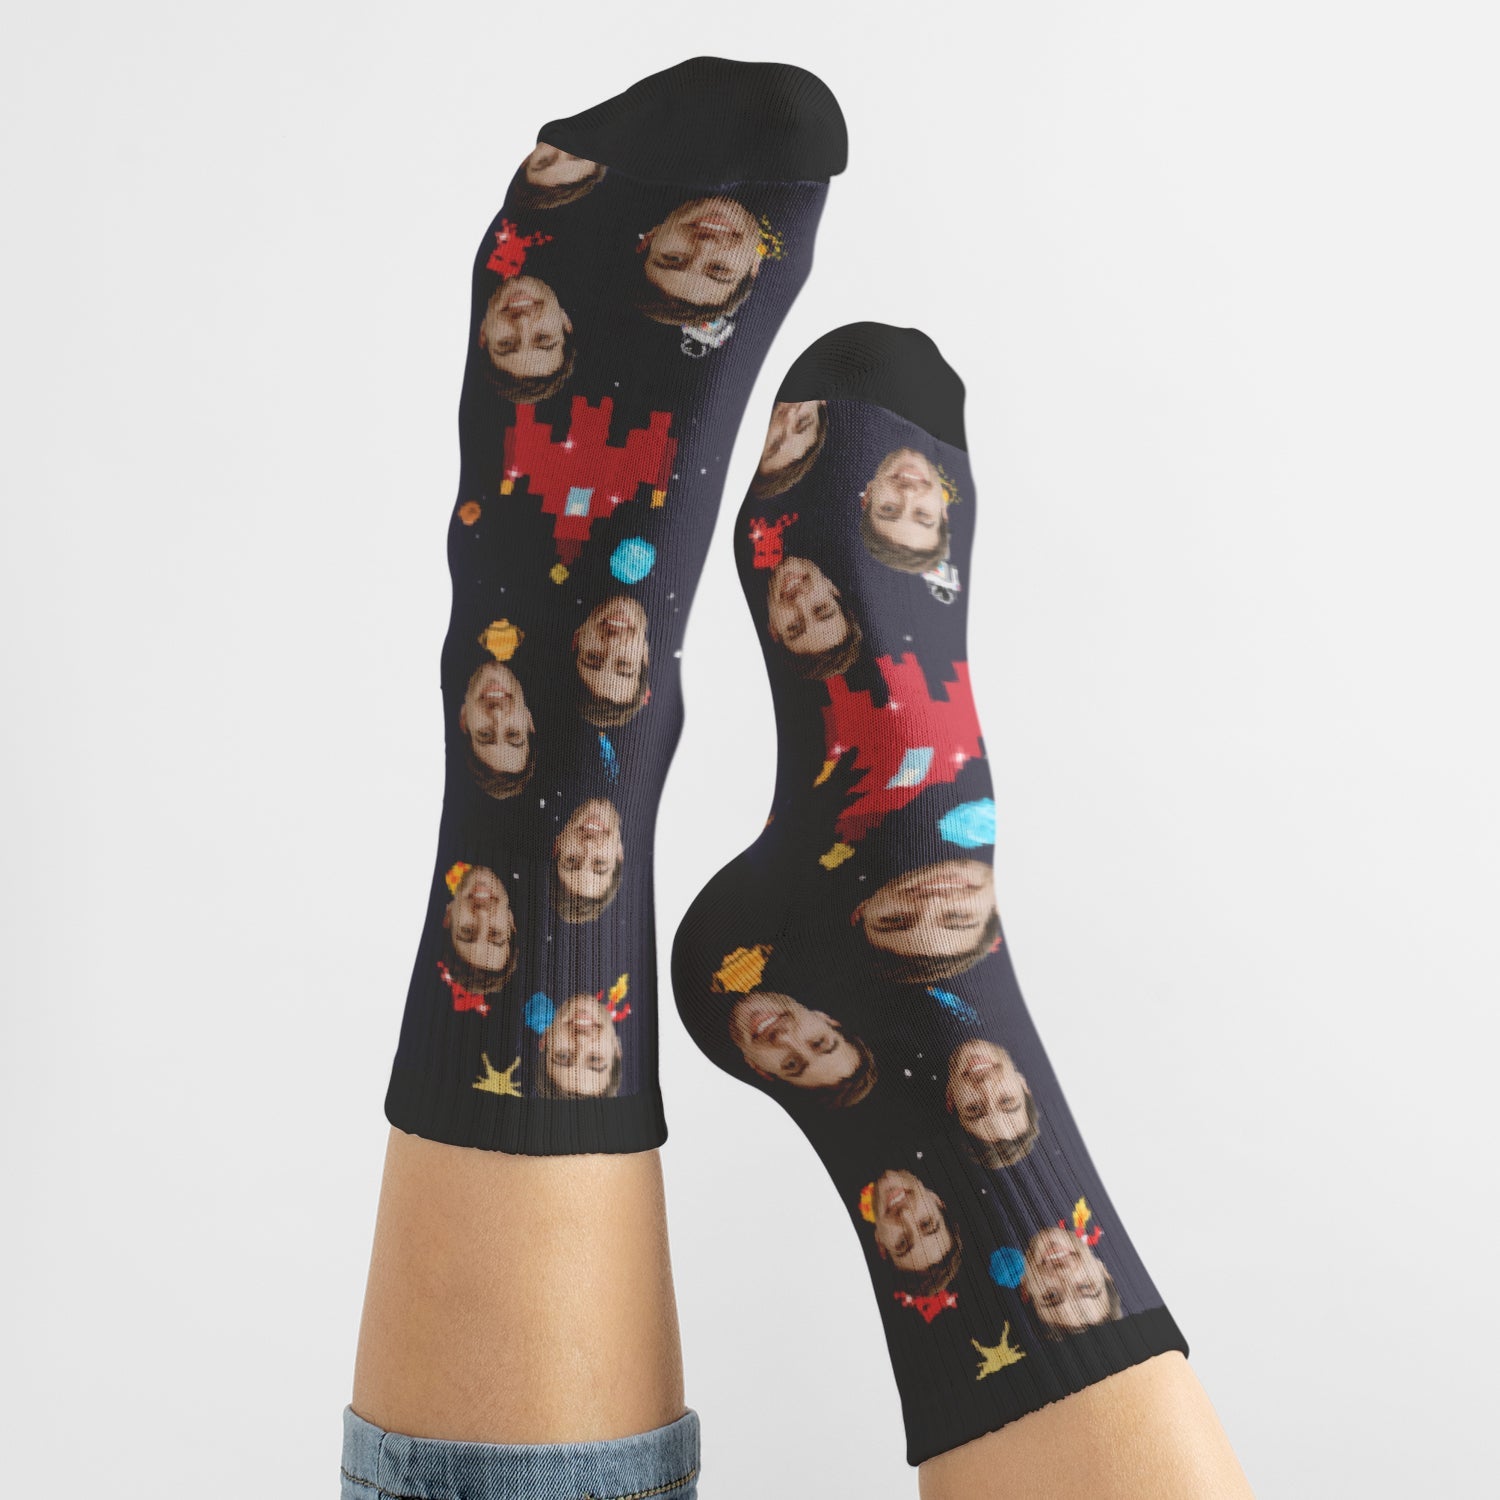 Personalisierte Weltraumspiel-Socken